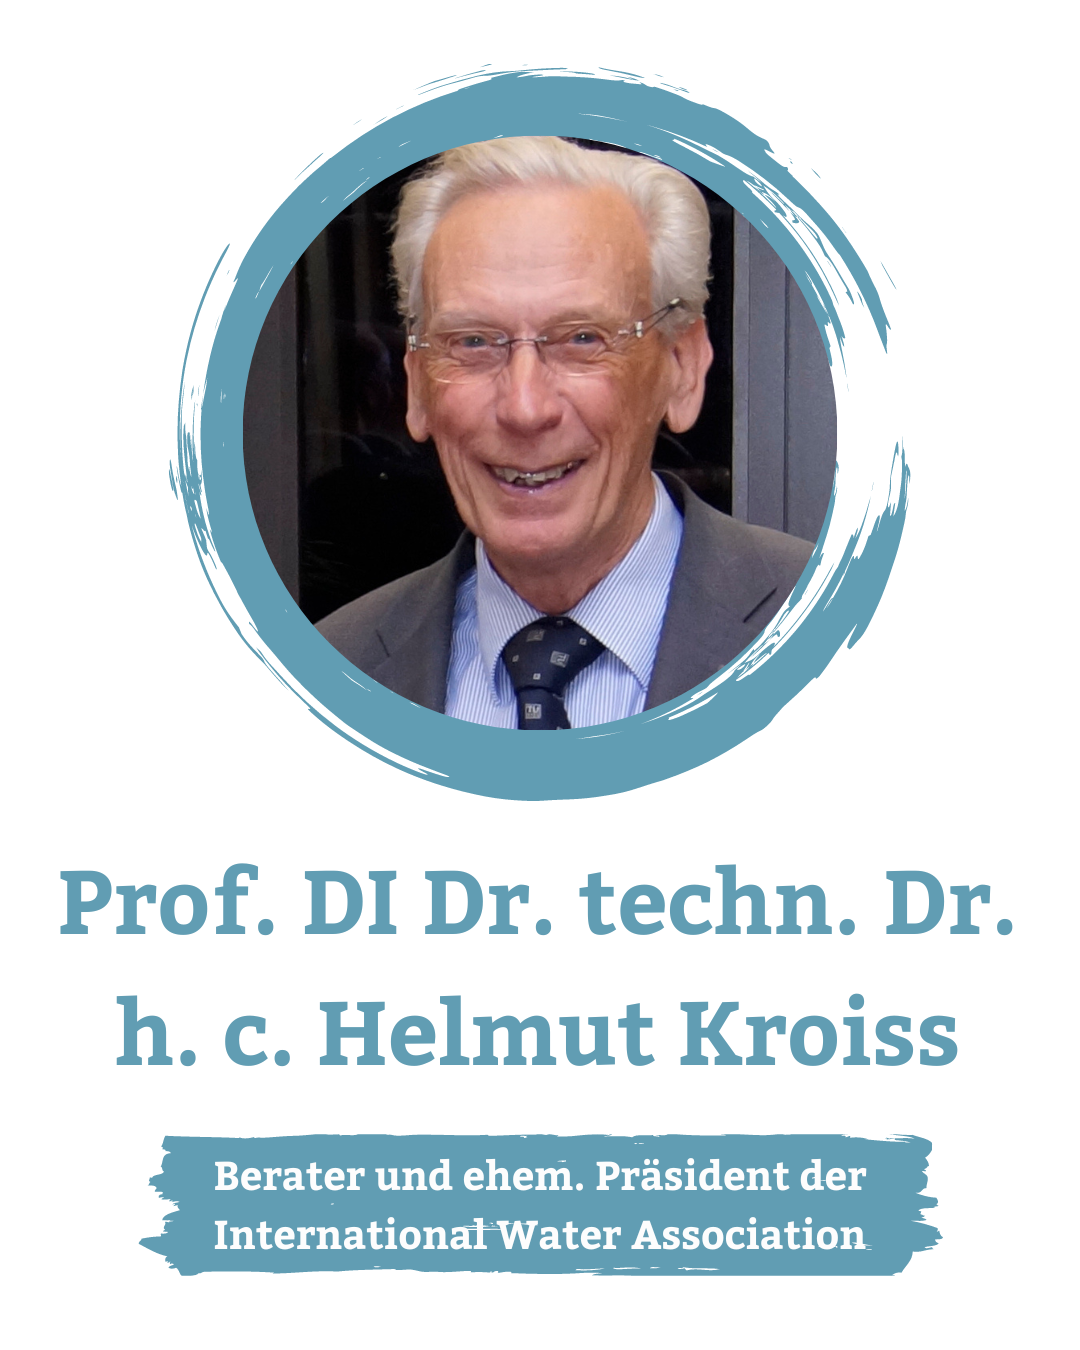 Em. O. Univ. Prof. DI. Dr. techn. Dr. h. c. Helmut Kroiss